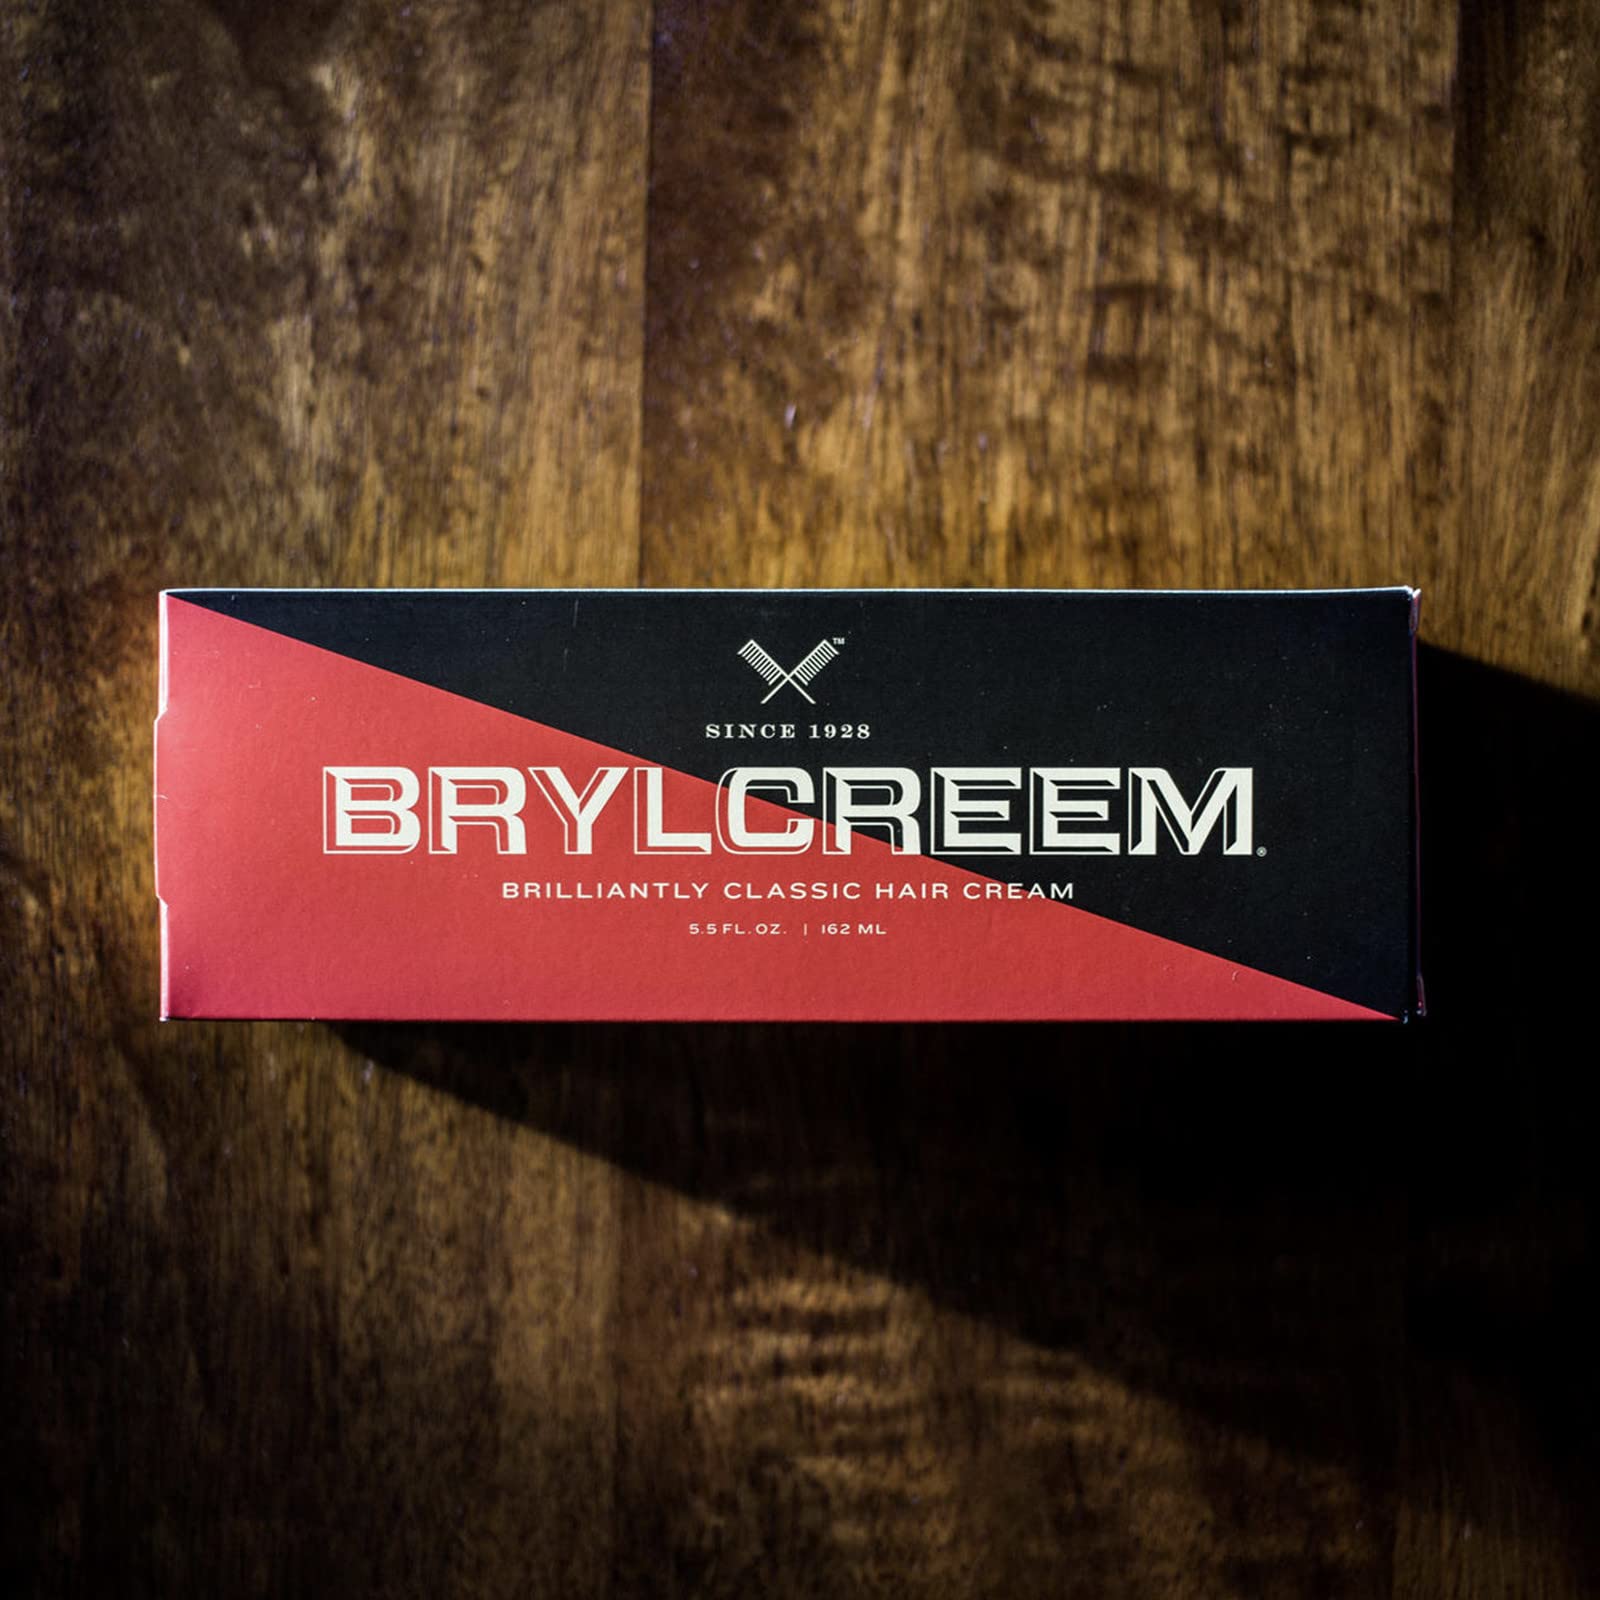 Brylcreem Hairfall Protect Haircream Review | Hairfall Reduction - YouTube